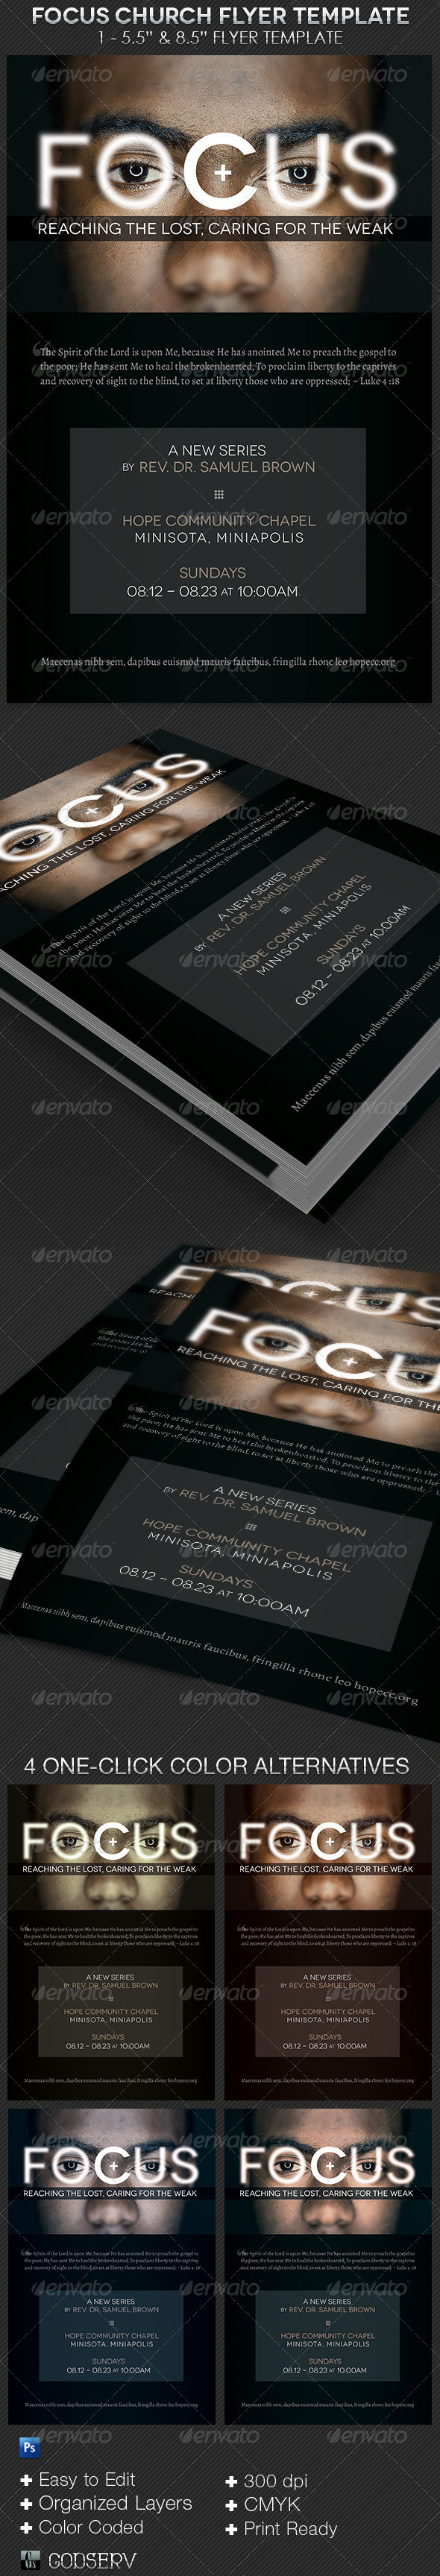 Focus church flyer template preview